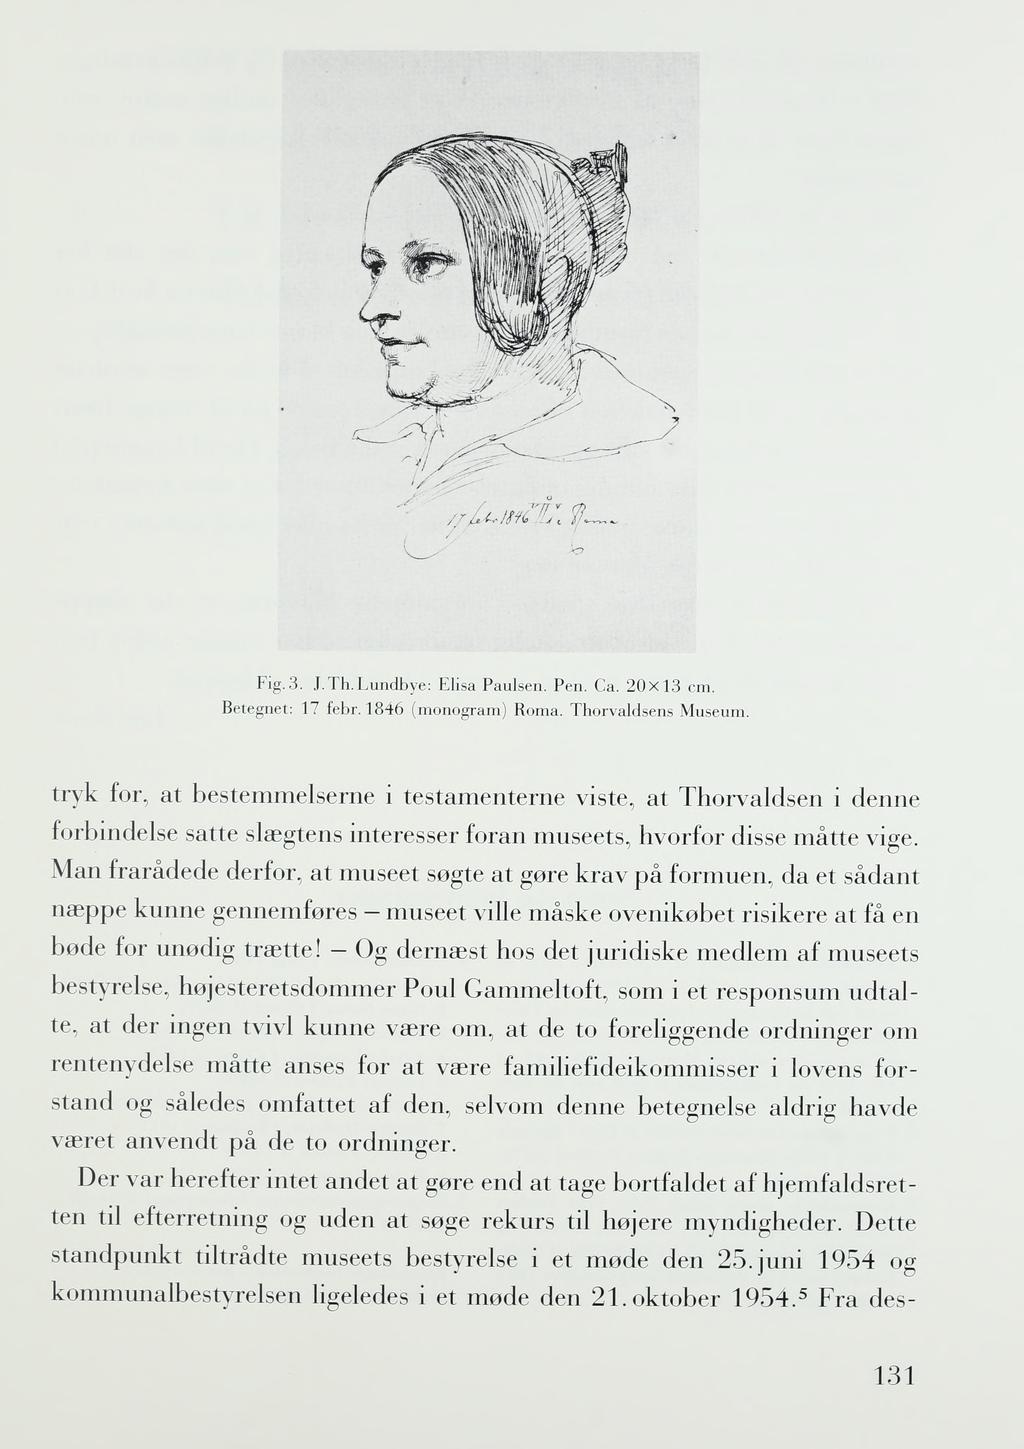 F ig.3. J.Th.Lundbye: Elisa Paulsen. Pen. Ca. 20x13 cm. Betegnet: 17 febr. 1846 (monogram) Roma. Thorvaldsens Museum.